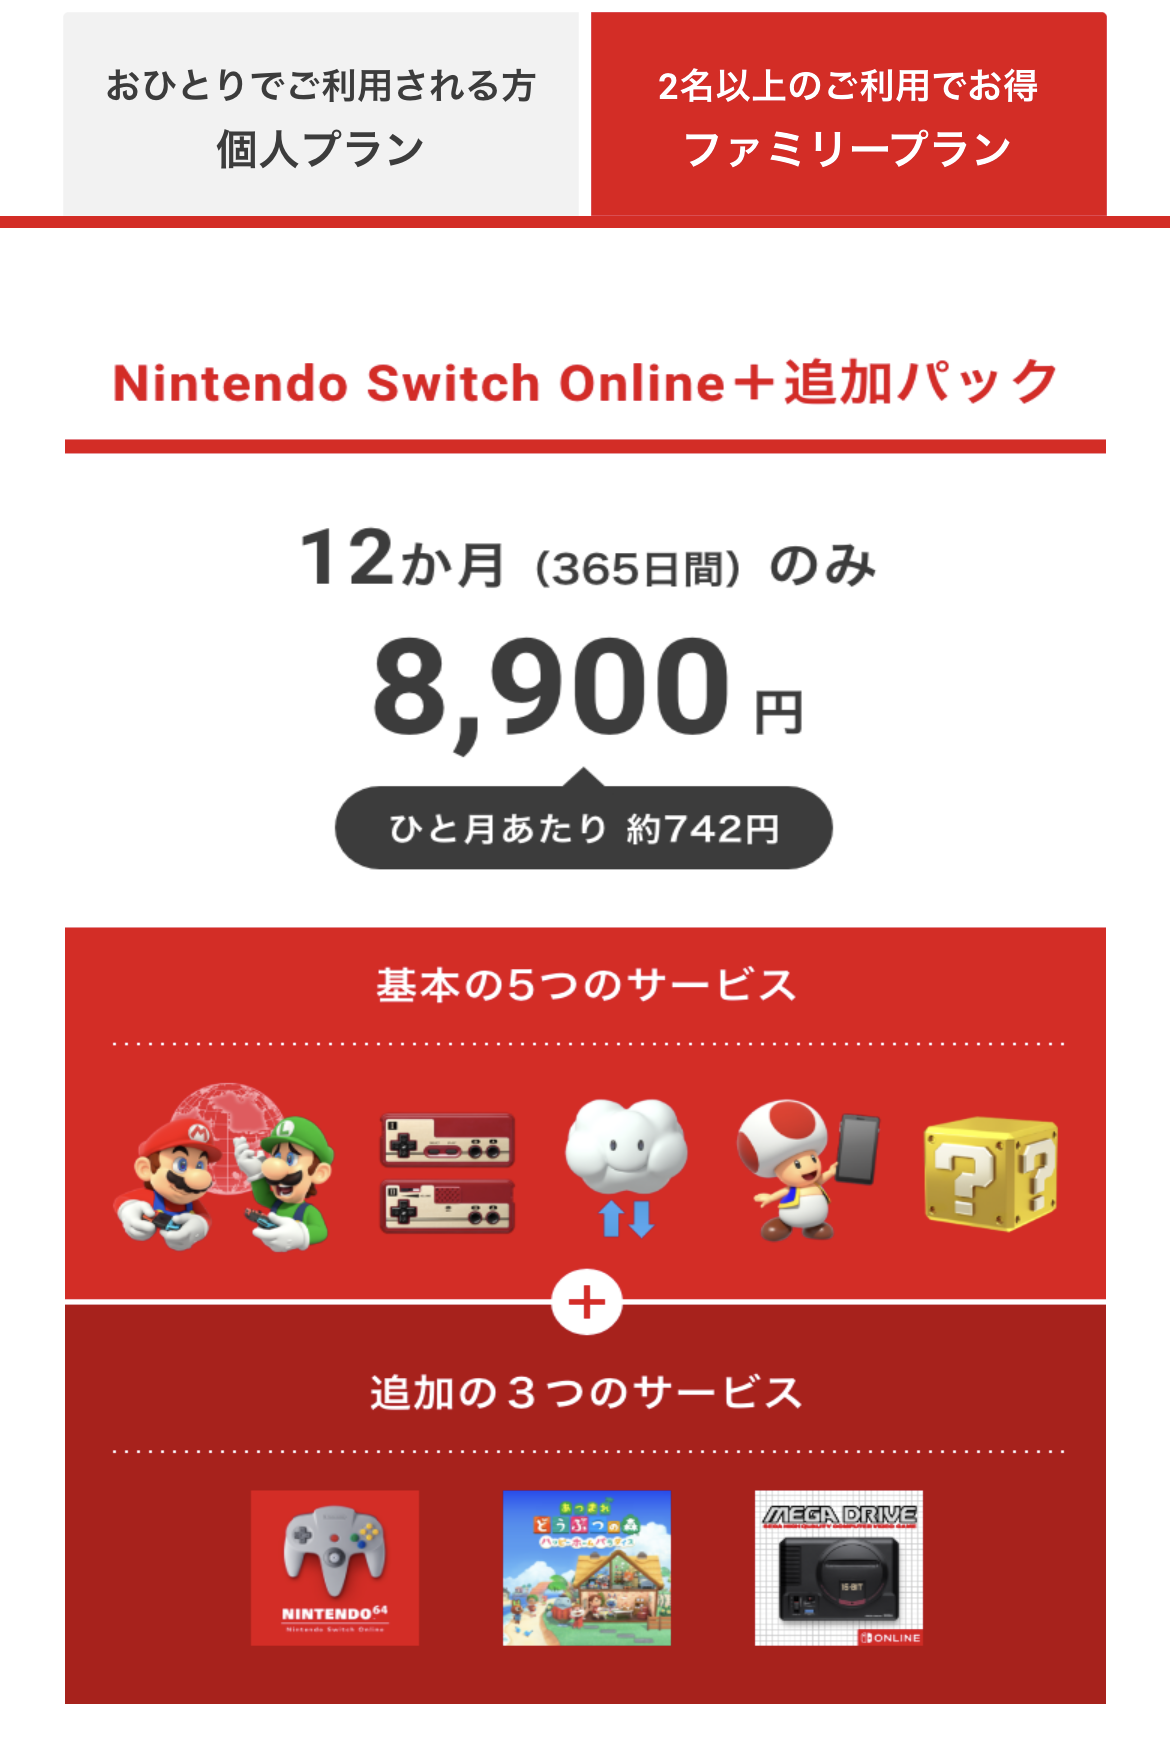 Nintendo Switch Online + 追加パック ファミリープラン